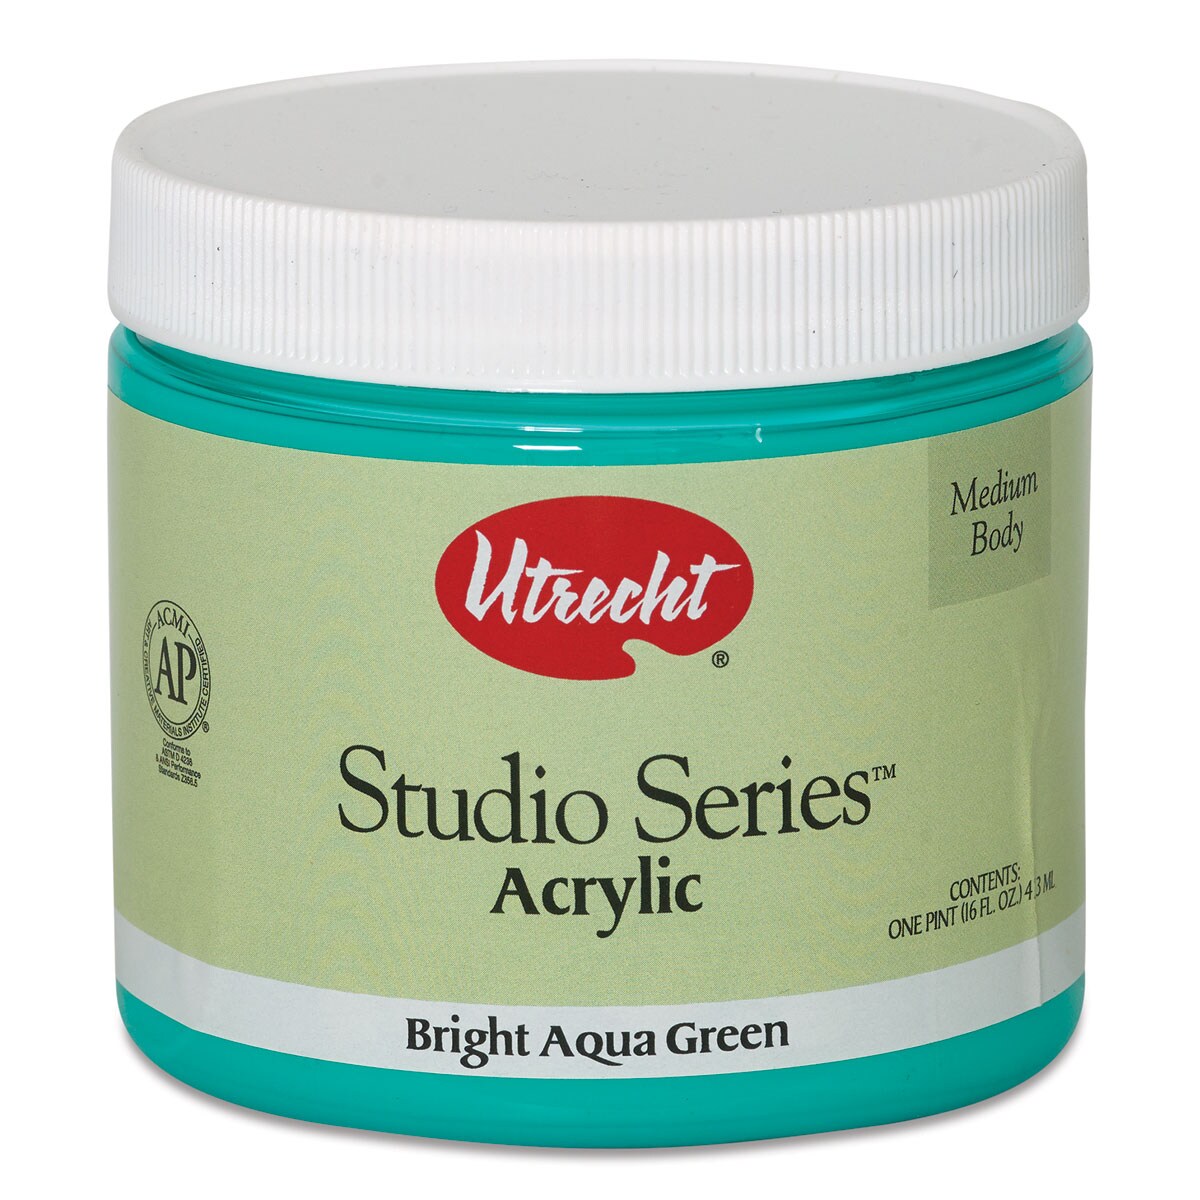 Utrecht Studio Series Acrylic Paint - Bright Aqua Green, Pint